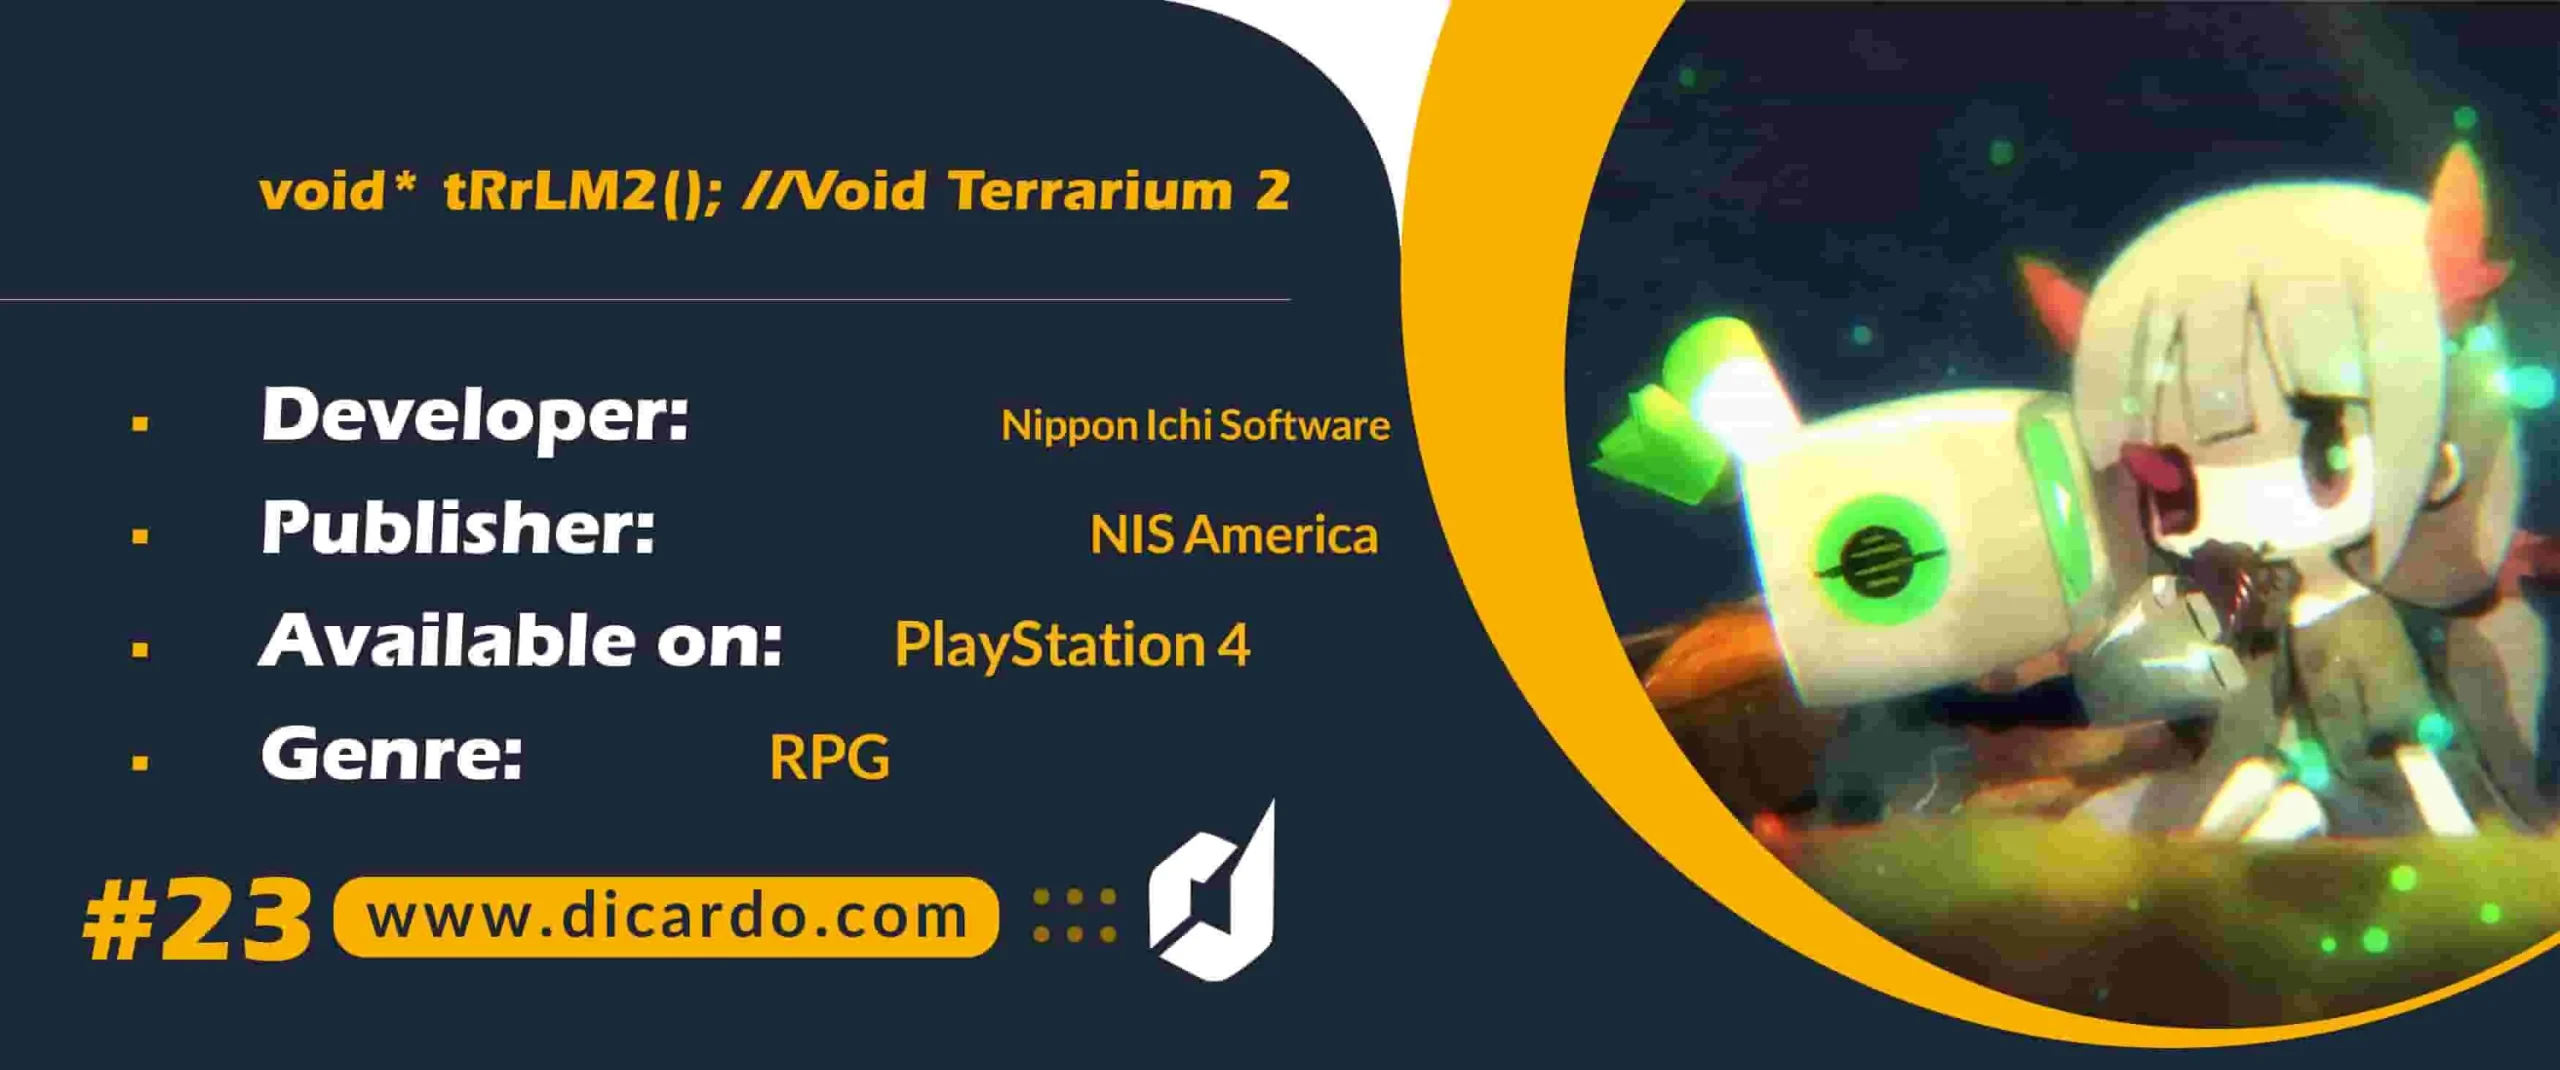 #23 ووید تراریوم 2 void* tRrLM2(); //Void Terrarium 2